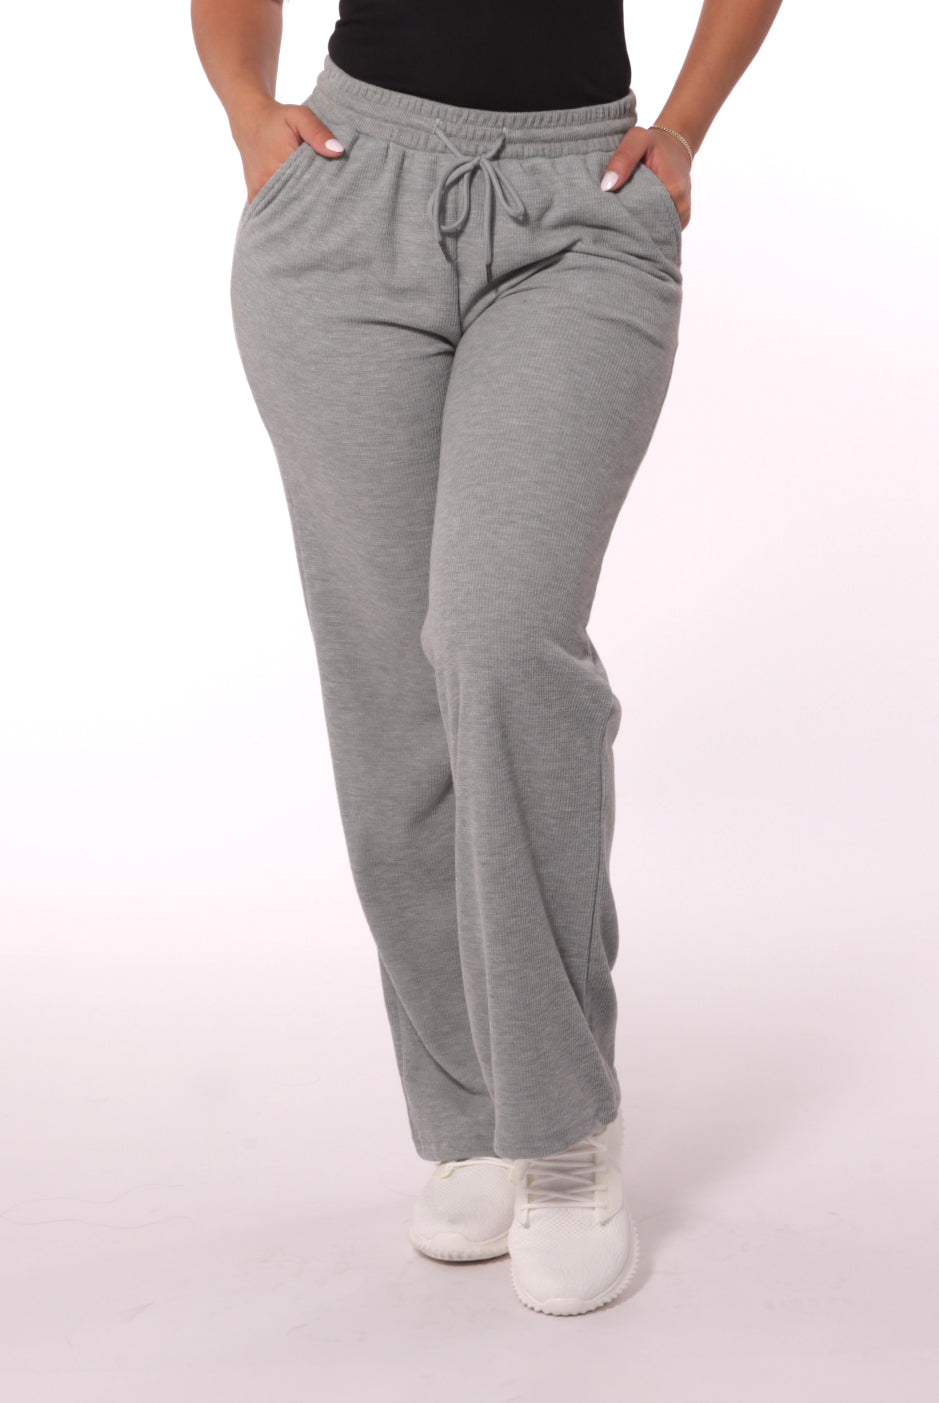 SHOSHO Fleece Lined Work-out Pants Dark Gray Heather Yoga Pant